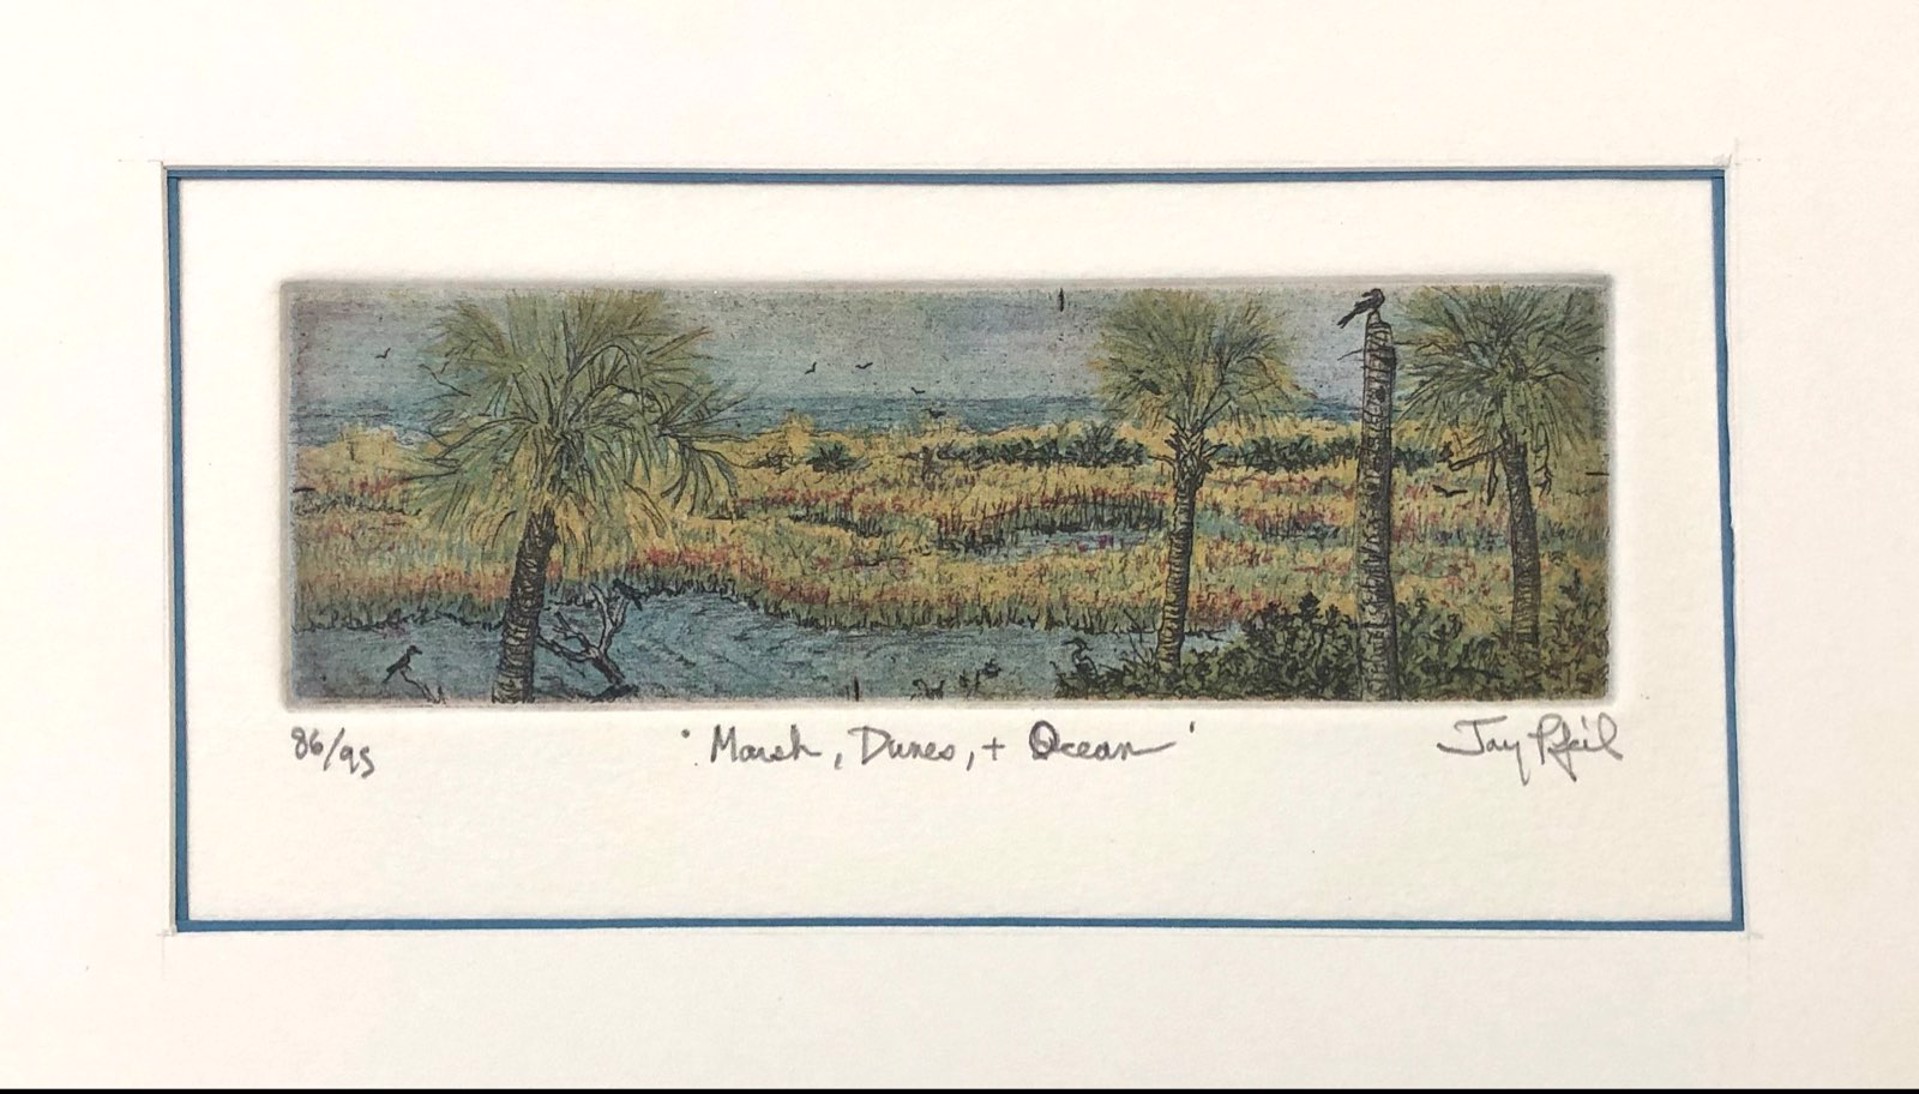 Marsh, Dunes, and Ocean (Unframed) by Jay Pfeil